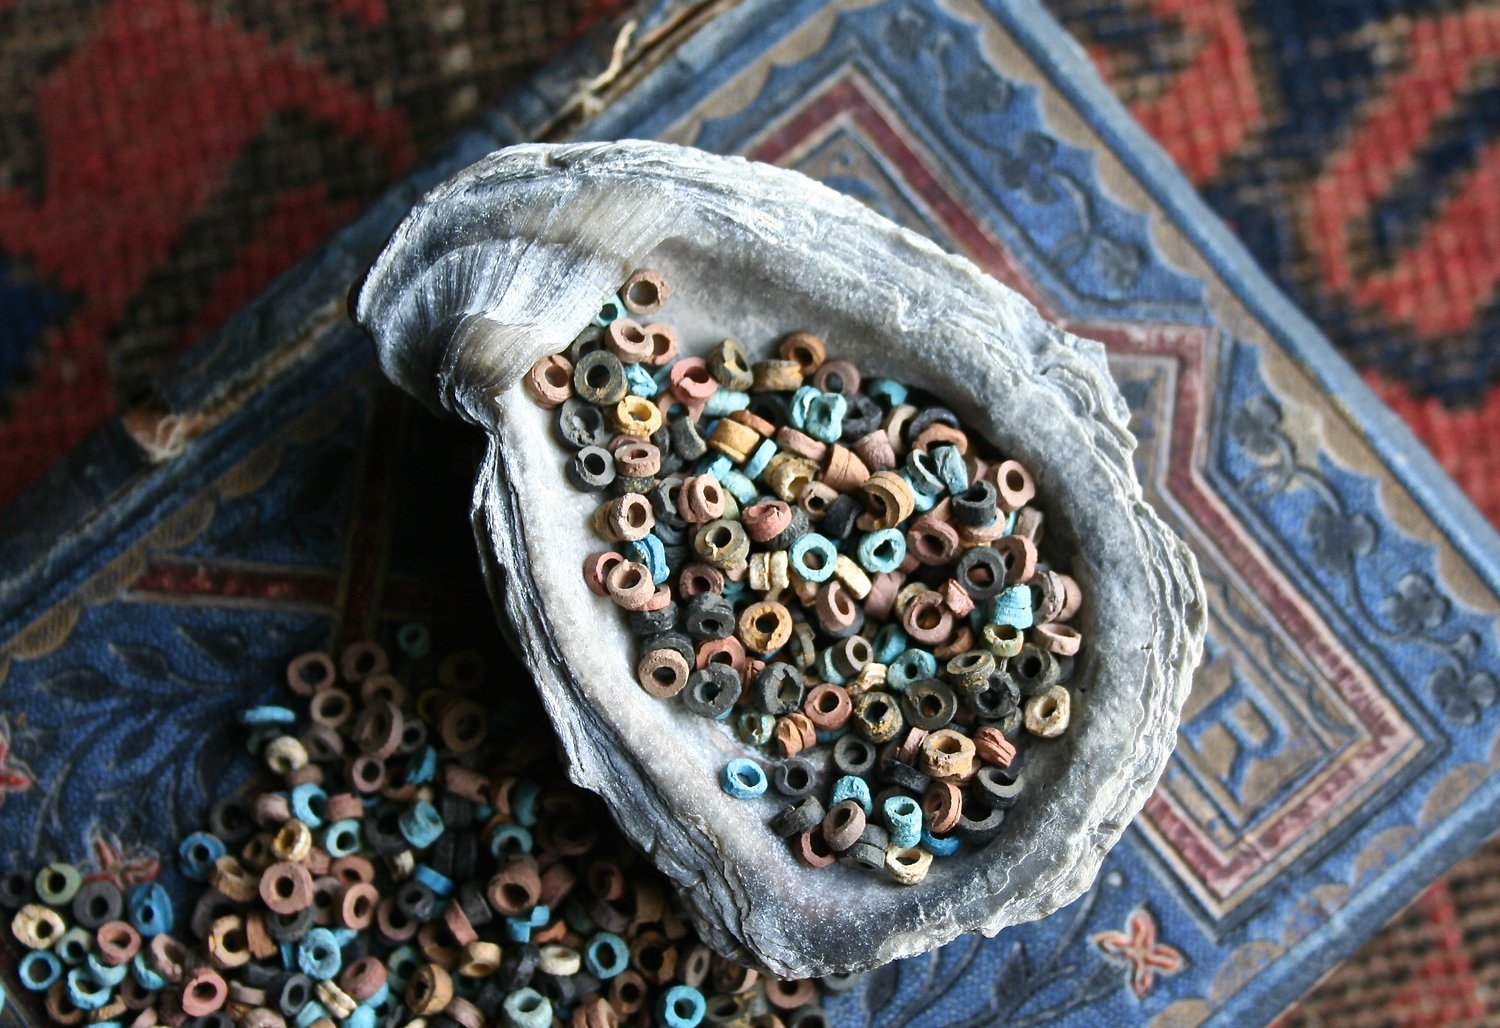 Made By Mummy Markets - Aqua bead creations are breeding in